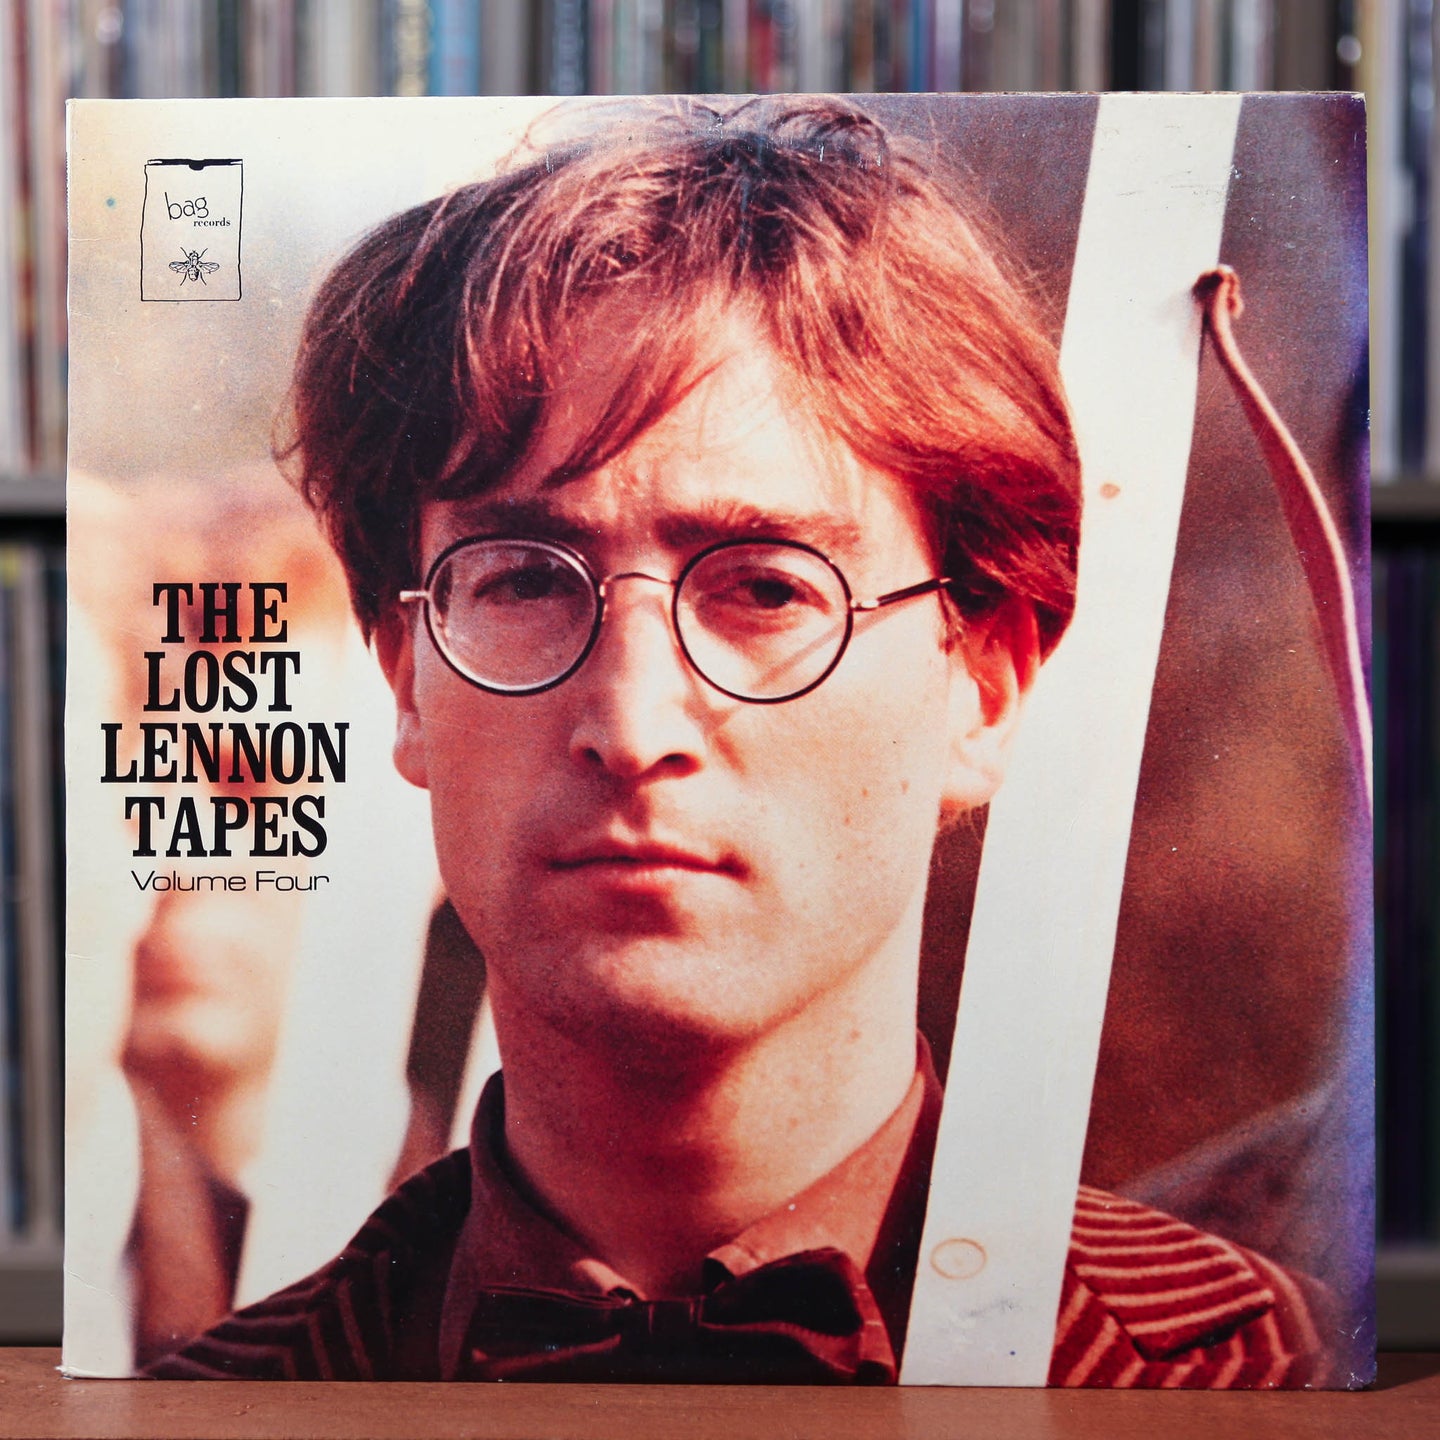 John Lennon - The Lost Lennon Tapes Vol. 4 - RARE Private Press - 1988 Bag Records, VG+/NM